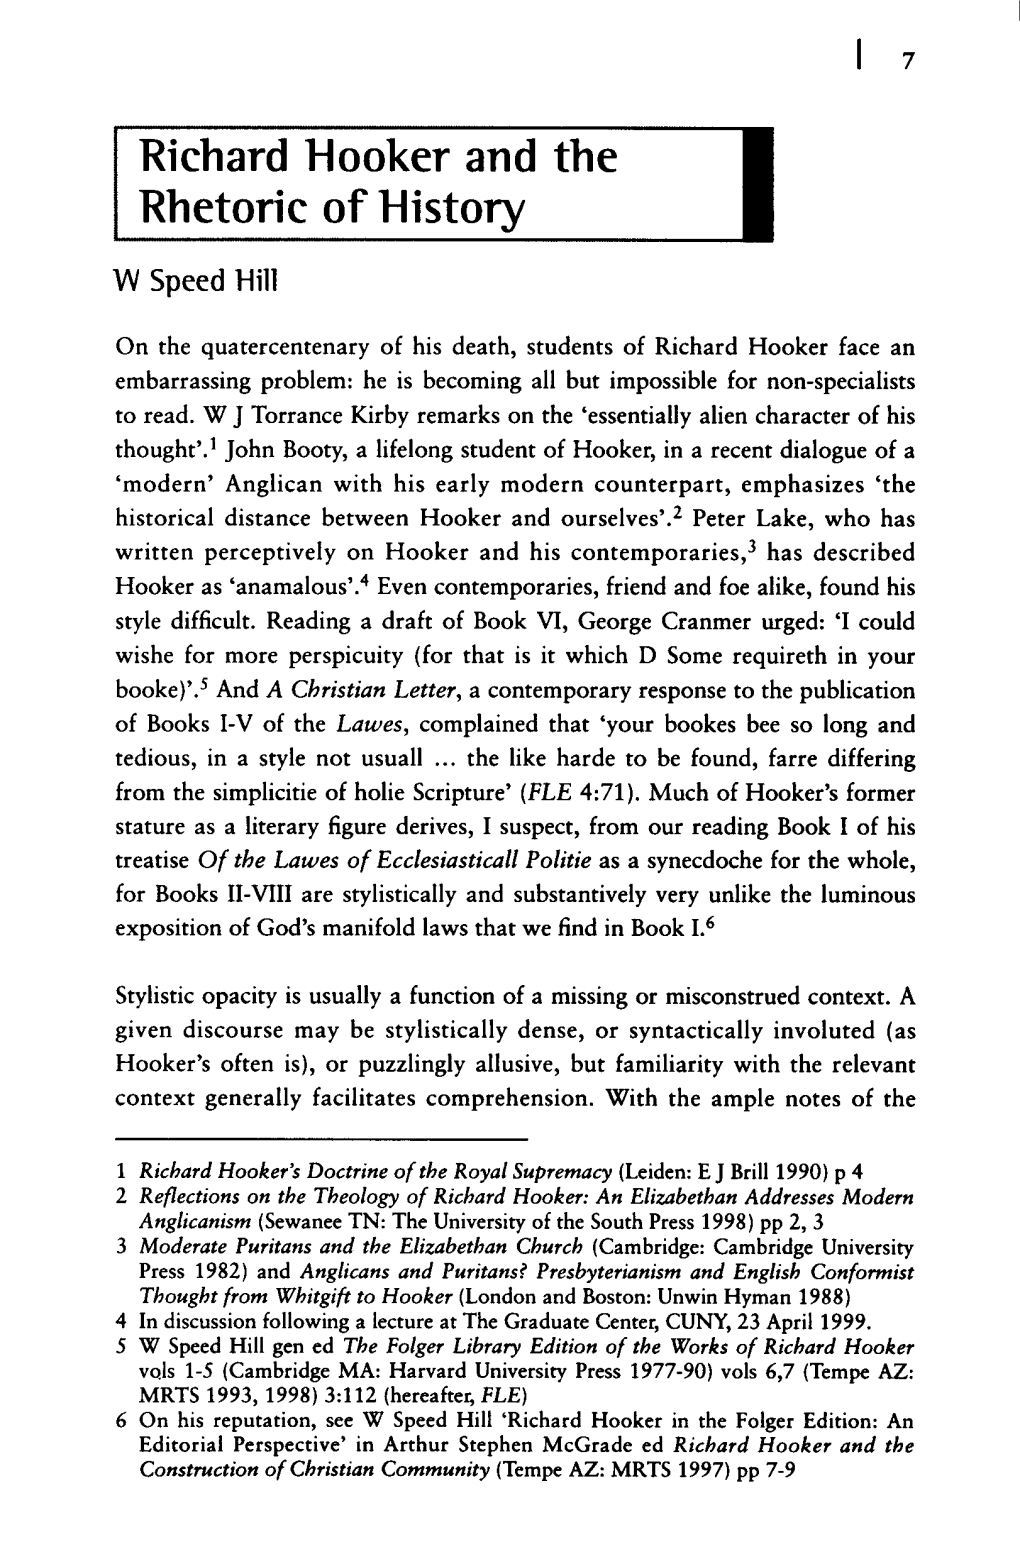 "Richard Hooker and the Rhetoric of History," Churchman 114.1